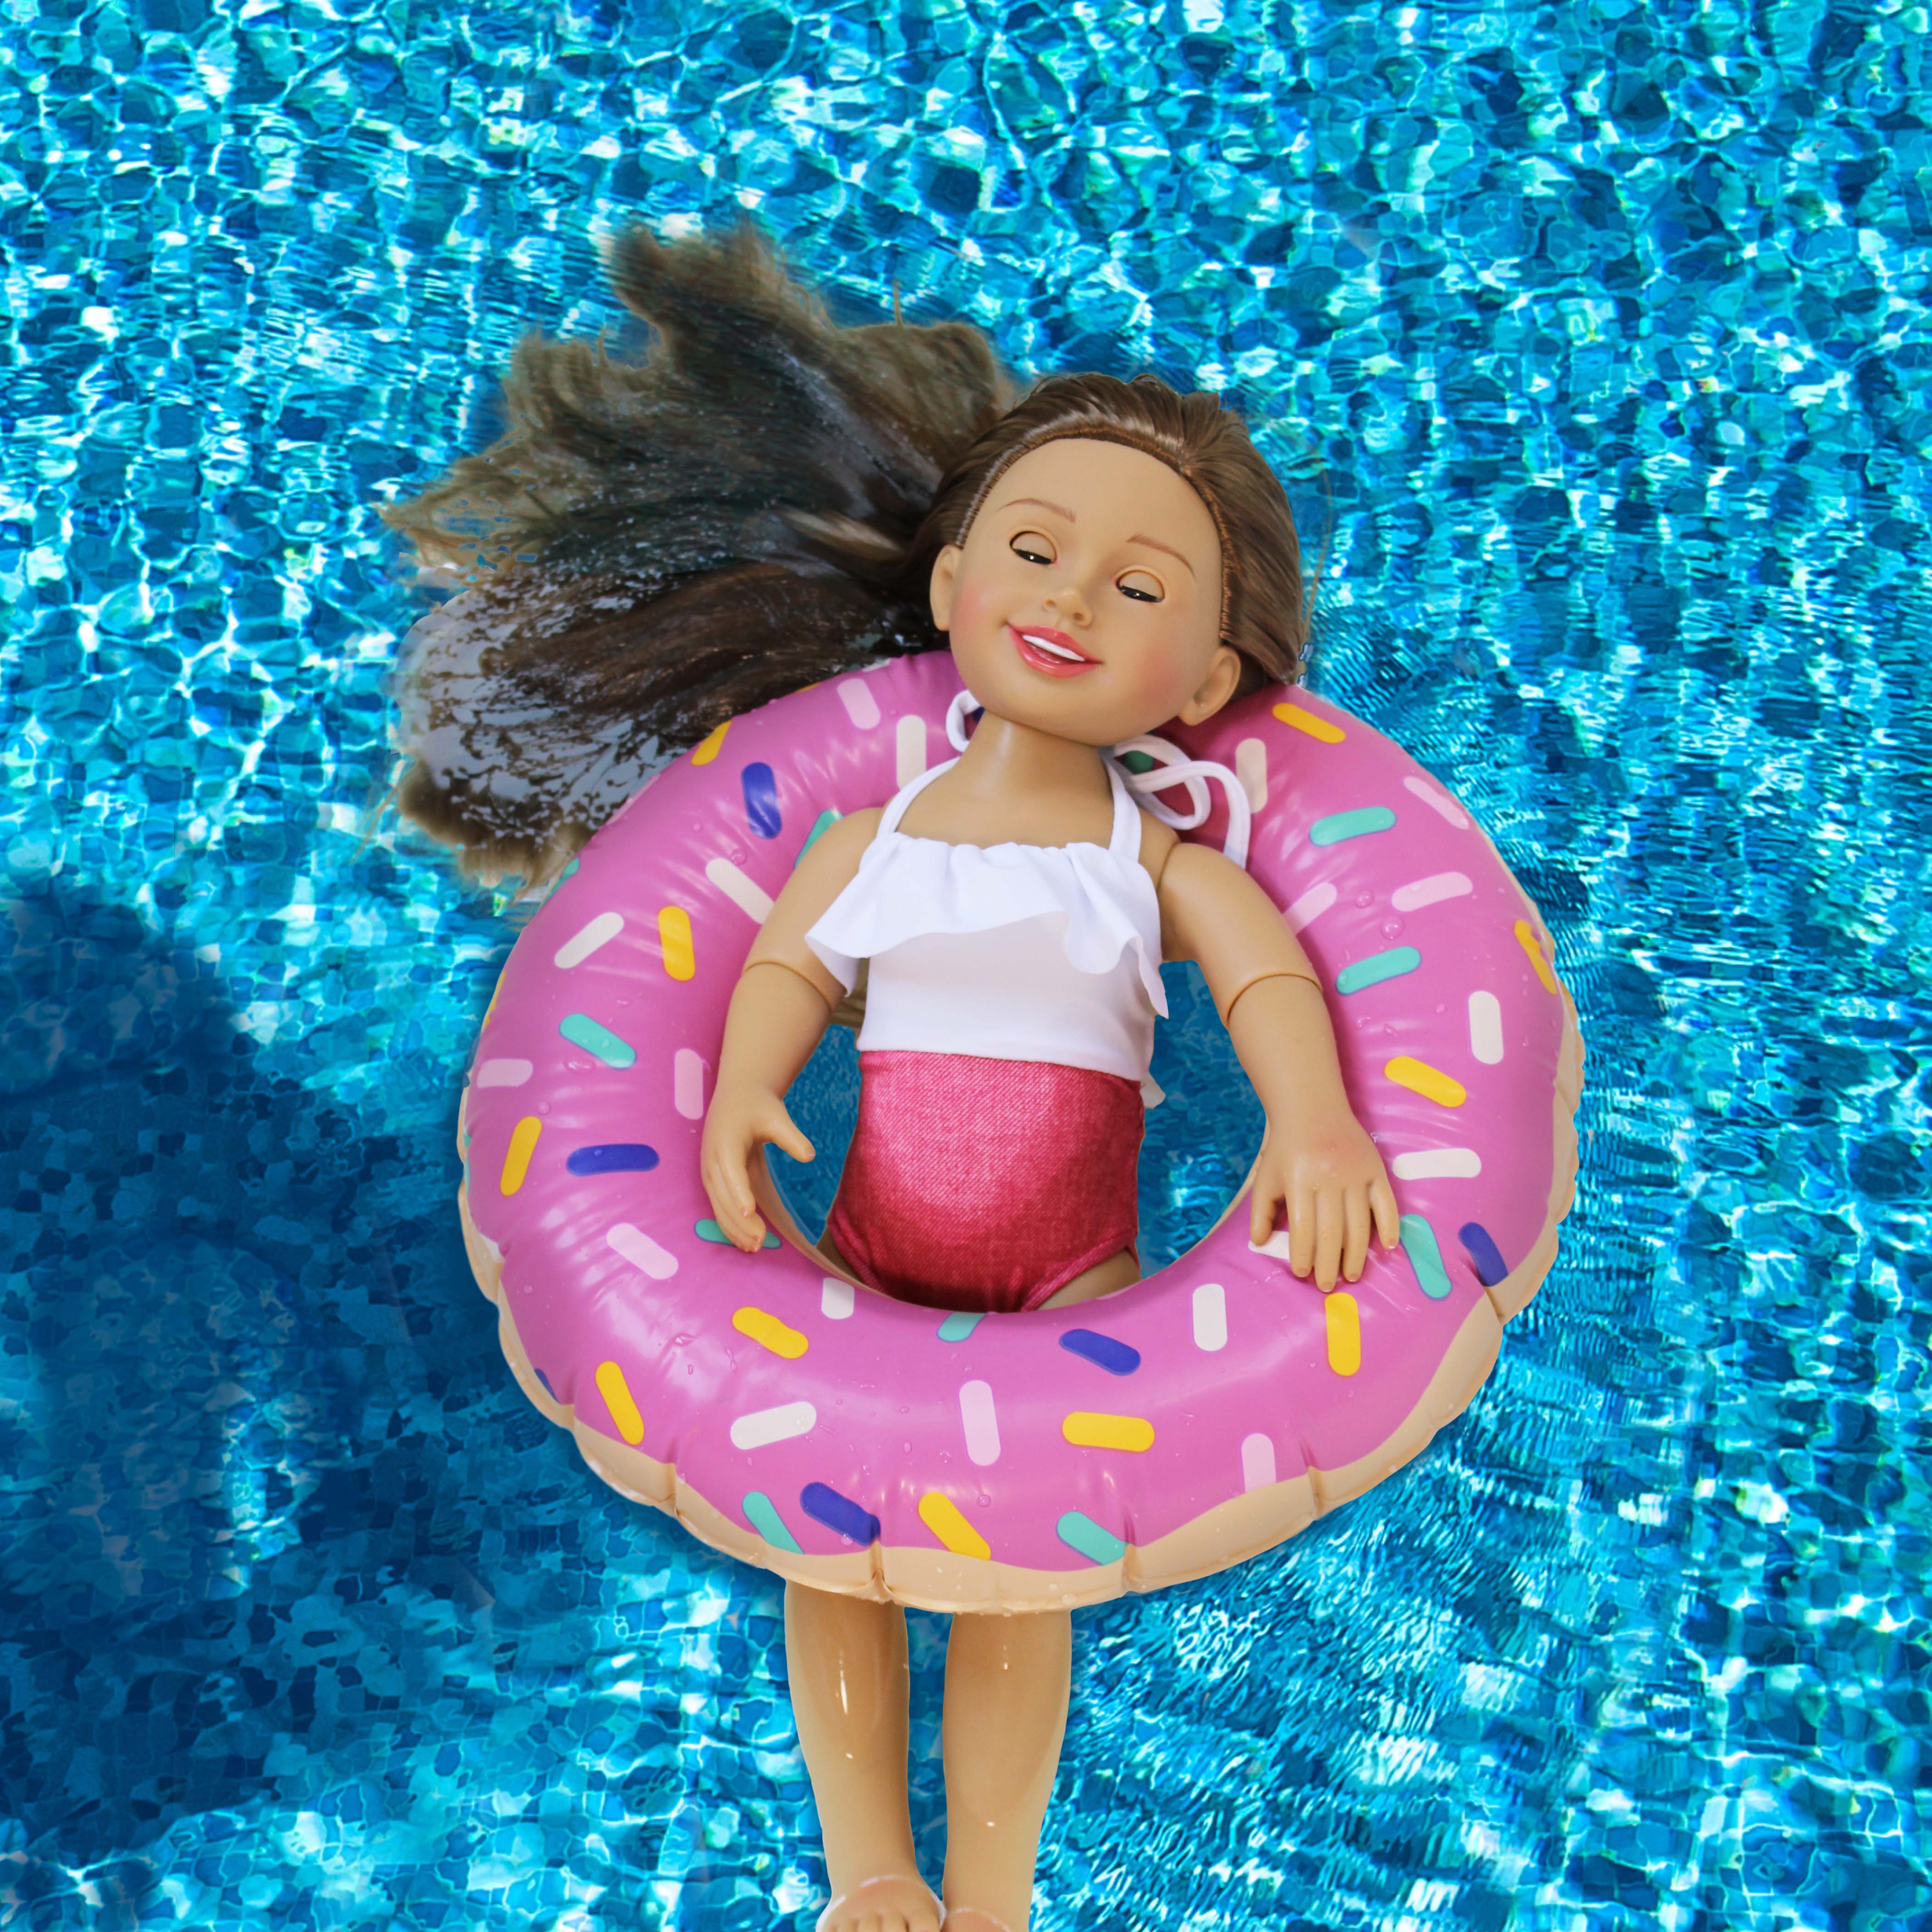 Dollfriend® Inner Tube Pool Float